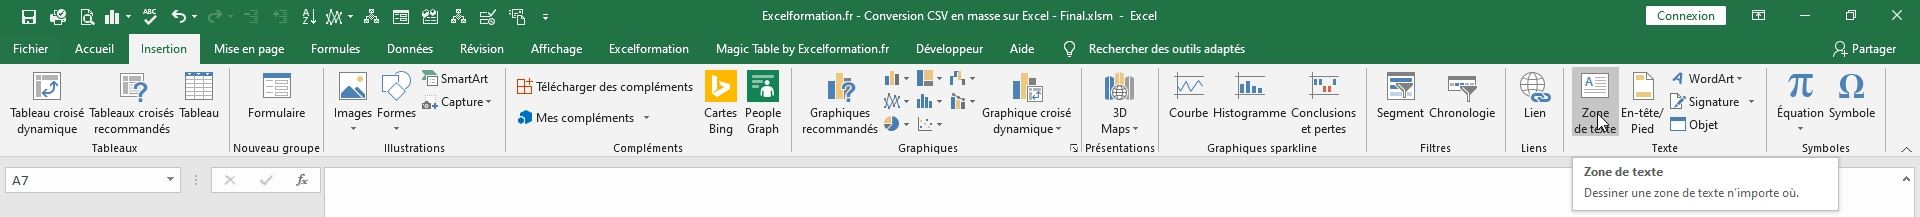 Excel formation - Conversion de CSV en fichier Excel en masse - 04